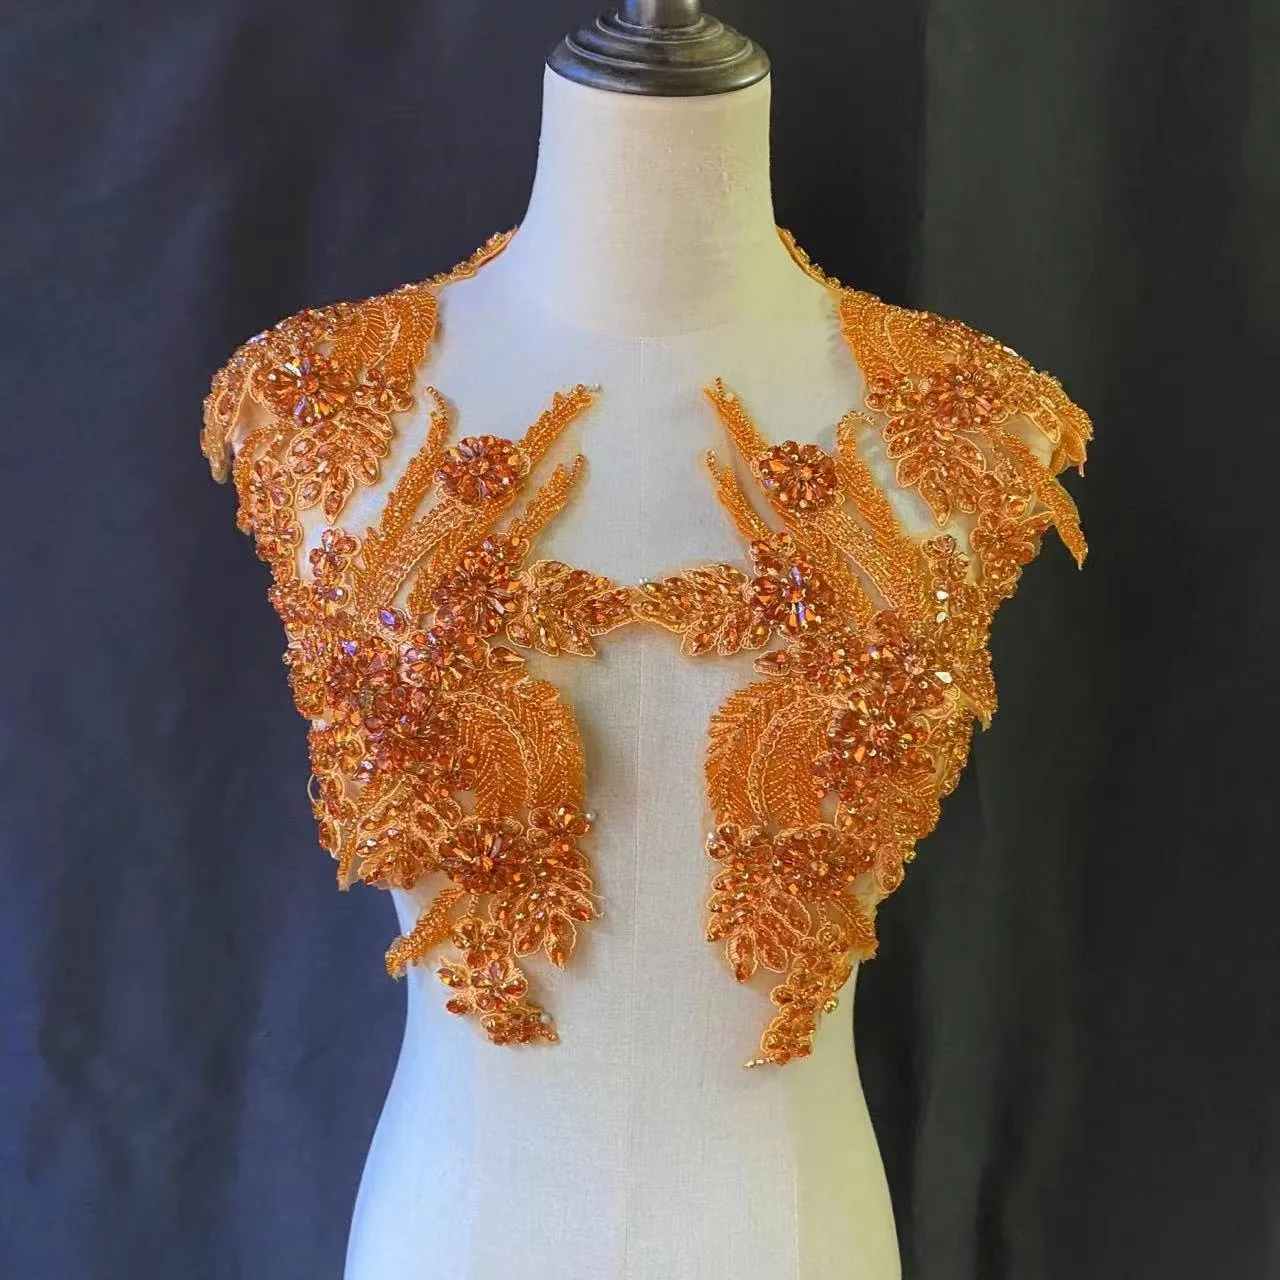 1 Pair Luxurious Orange Crystal Applique Vintage Flower Rhinestone Bodice Patch for Costume,Wedding Dress,Couture,Bridal Decor